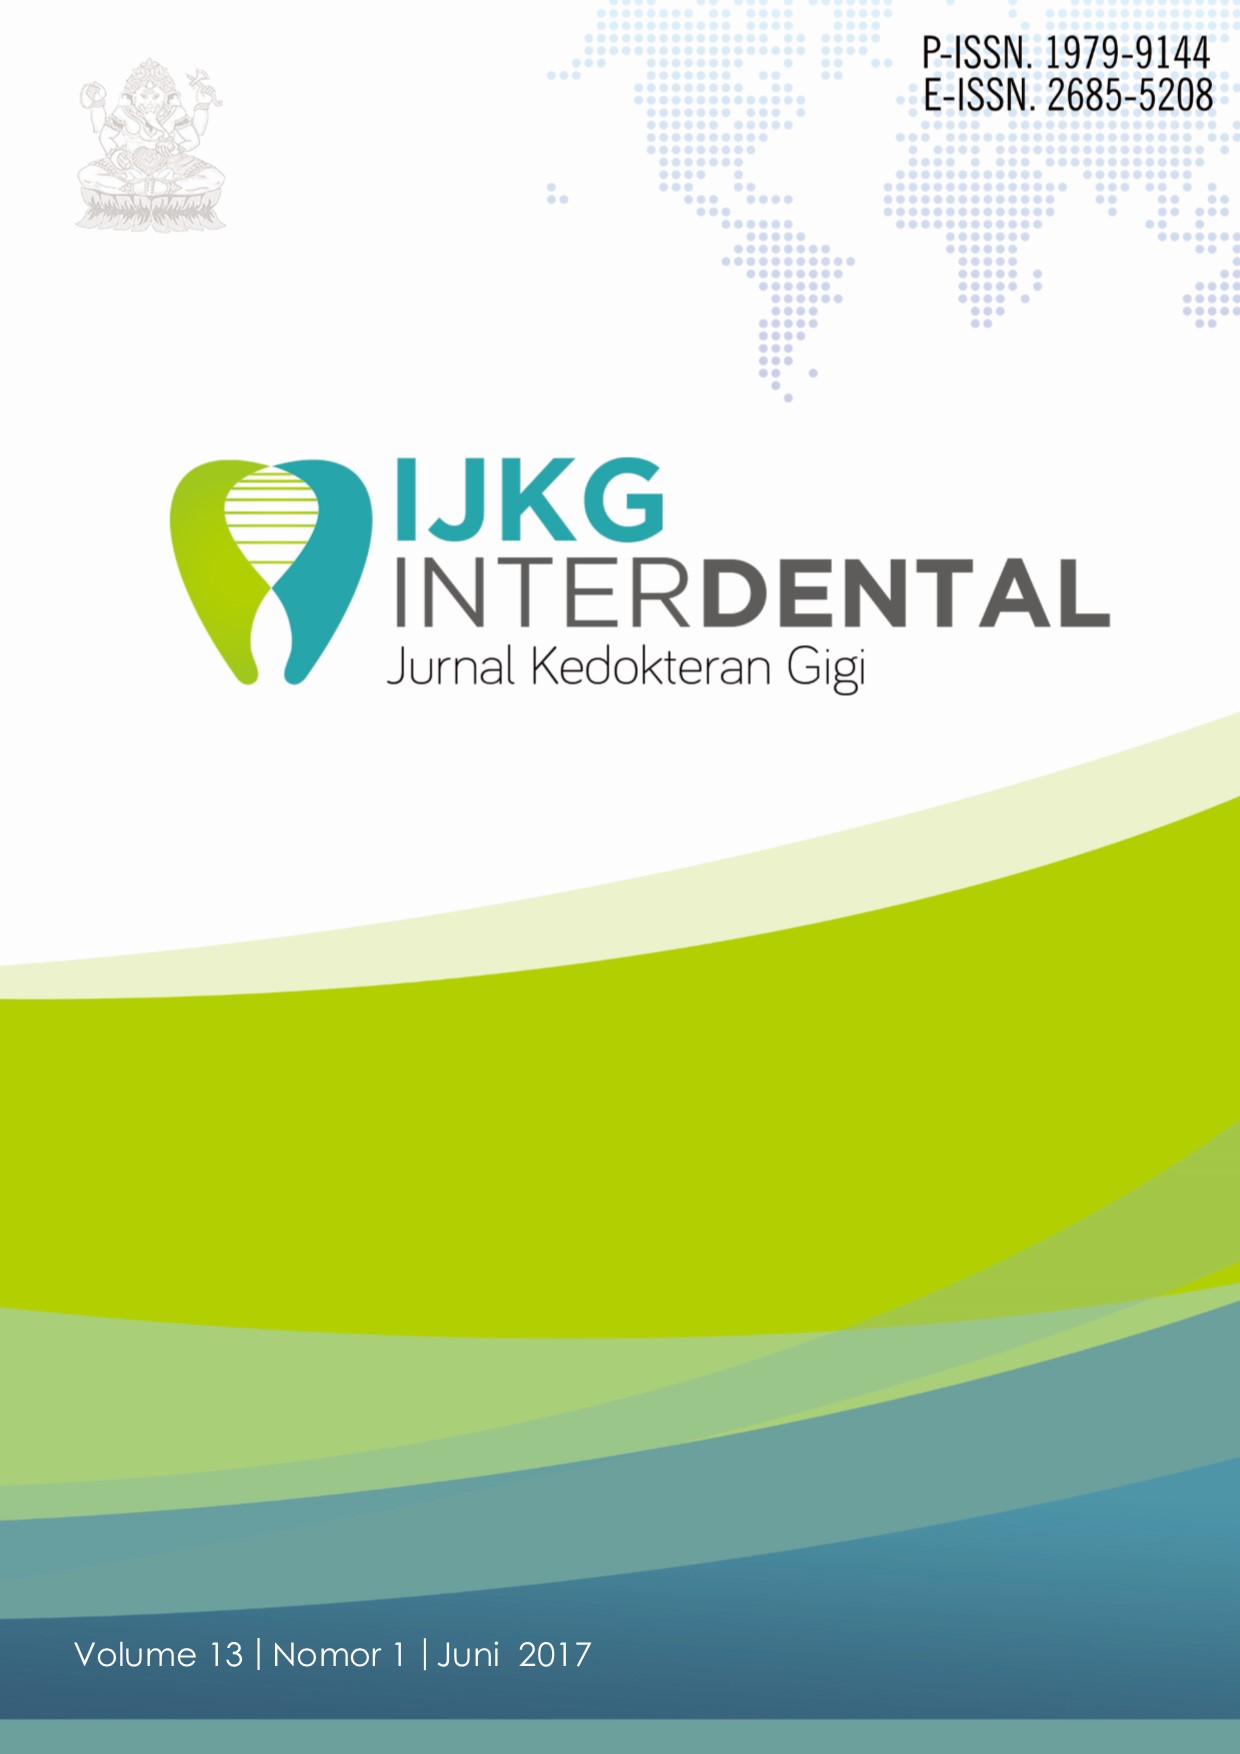 					View Vol. 13 No. 1 (2017): Interdental Jurnal Kedokteran Gigi (IJKG)
				